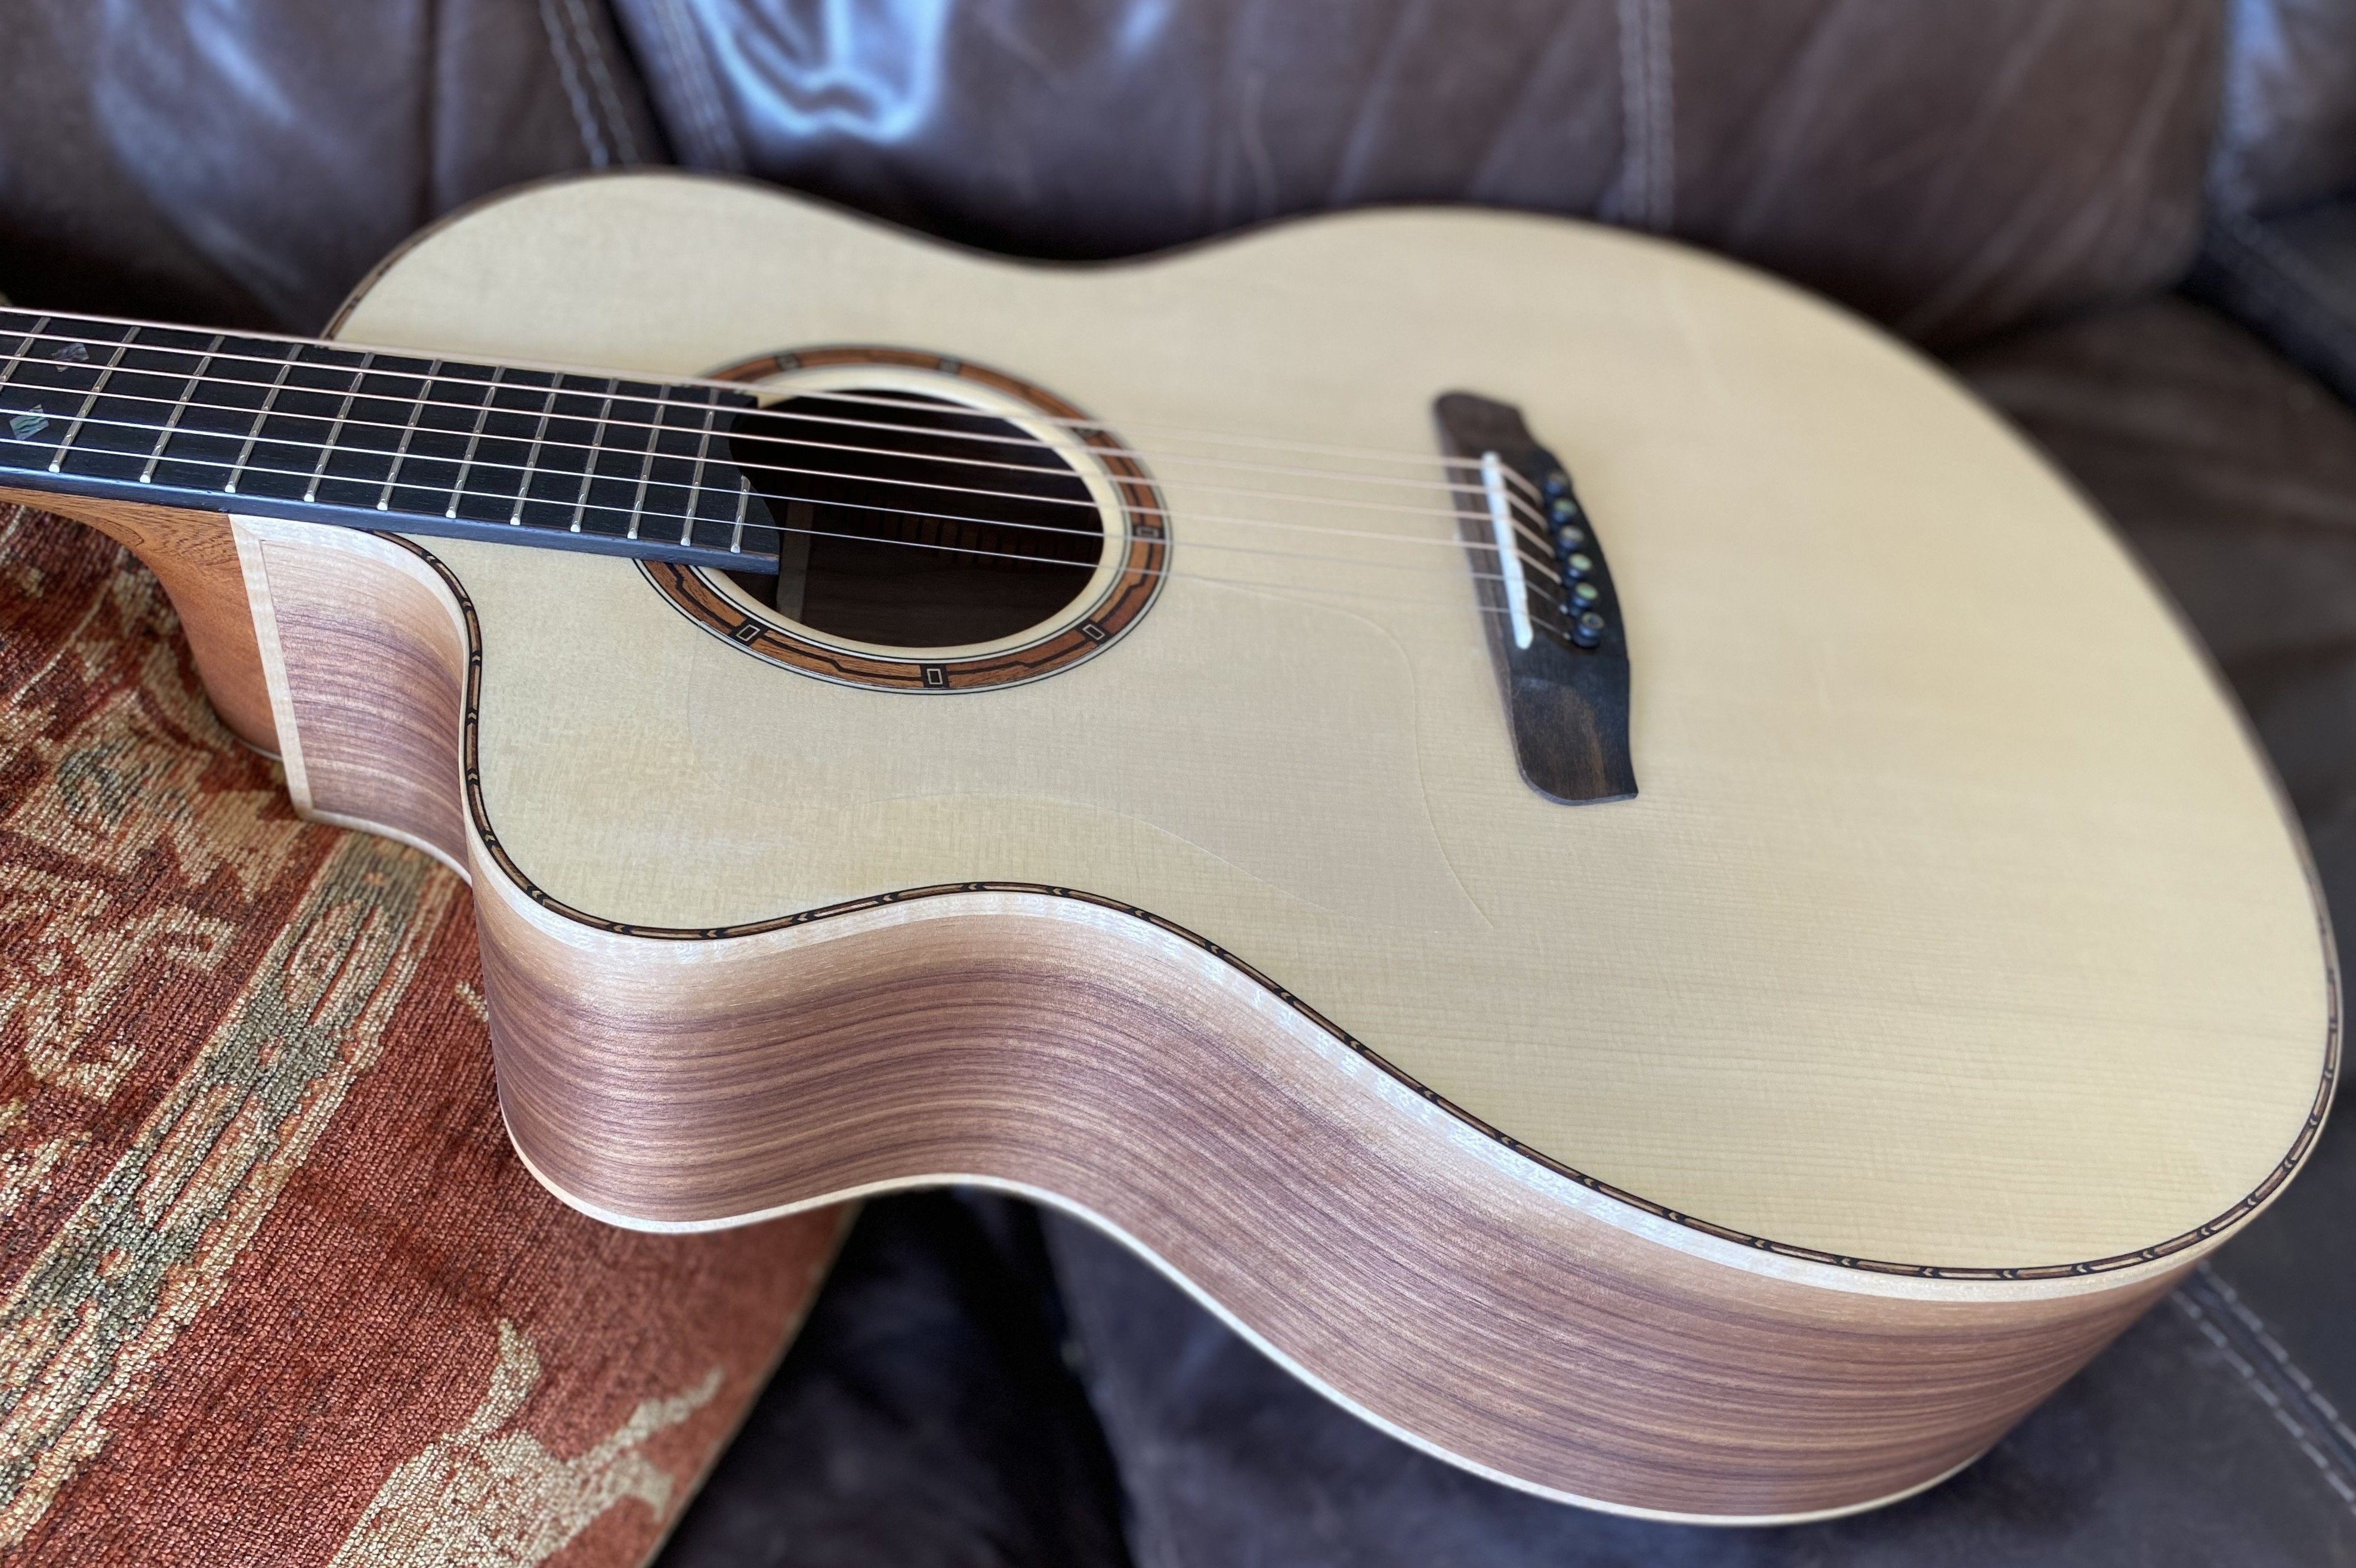 Dowina Walnut (Sol)  GAC DS Left Handed, Acoustic Guitar for sale at Richards Guitars.